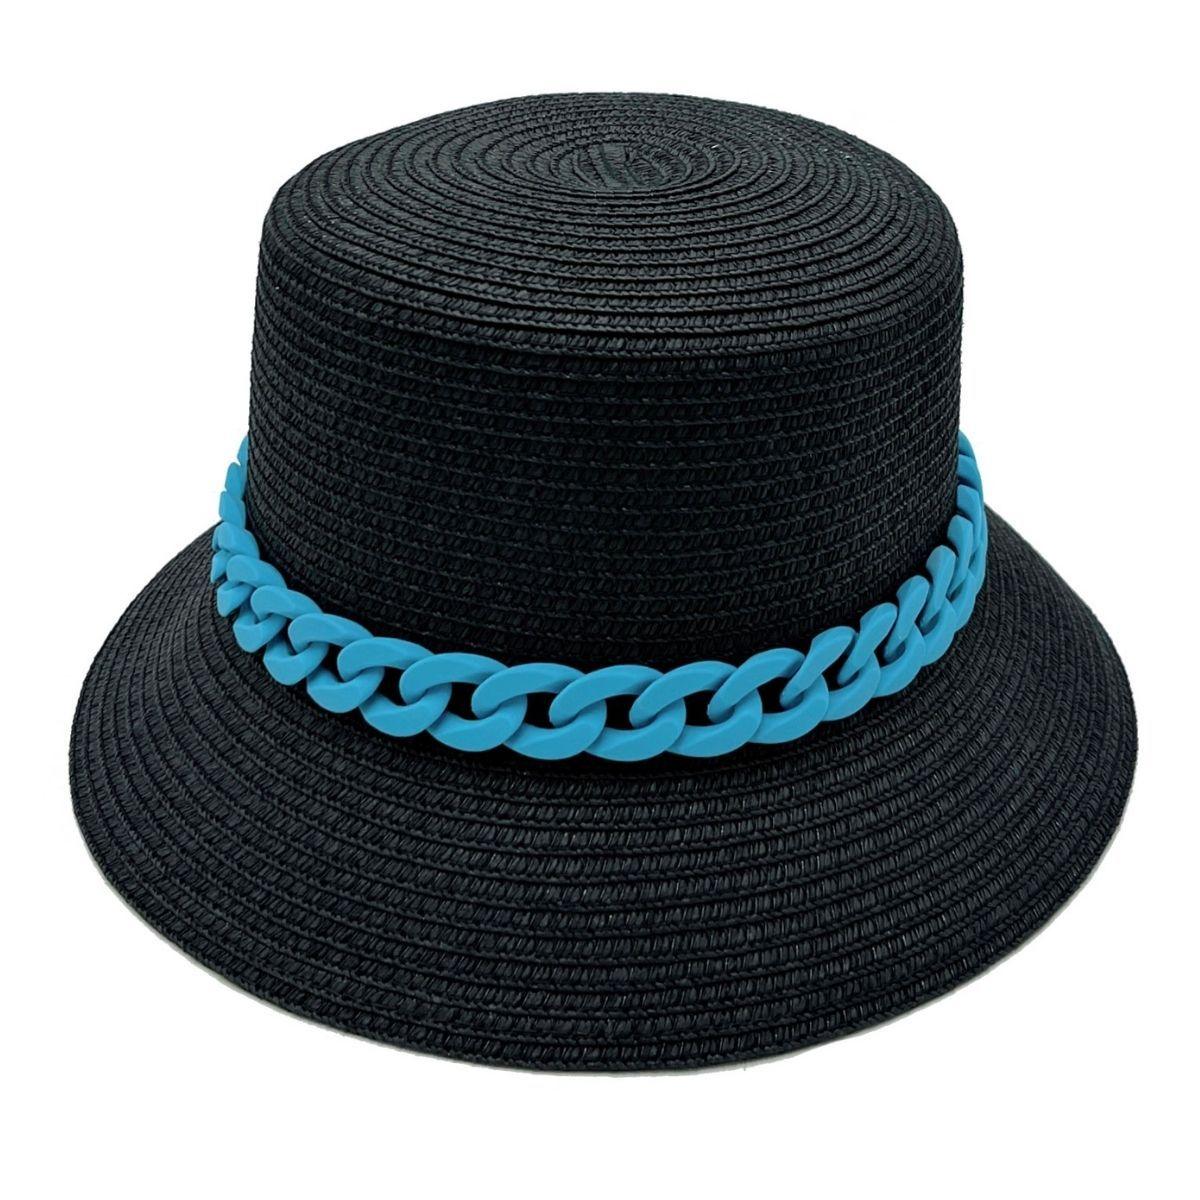 Classic Black Bucket Hat Blue Chain Detail